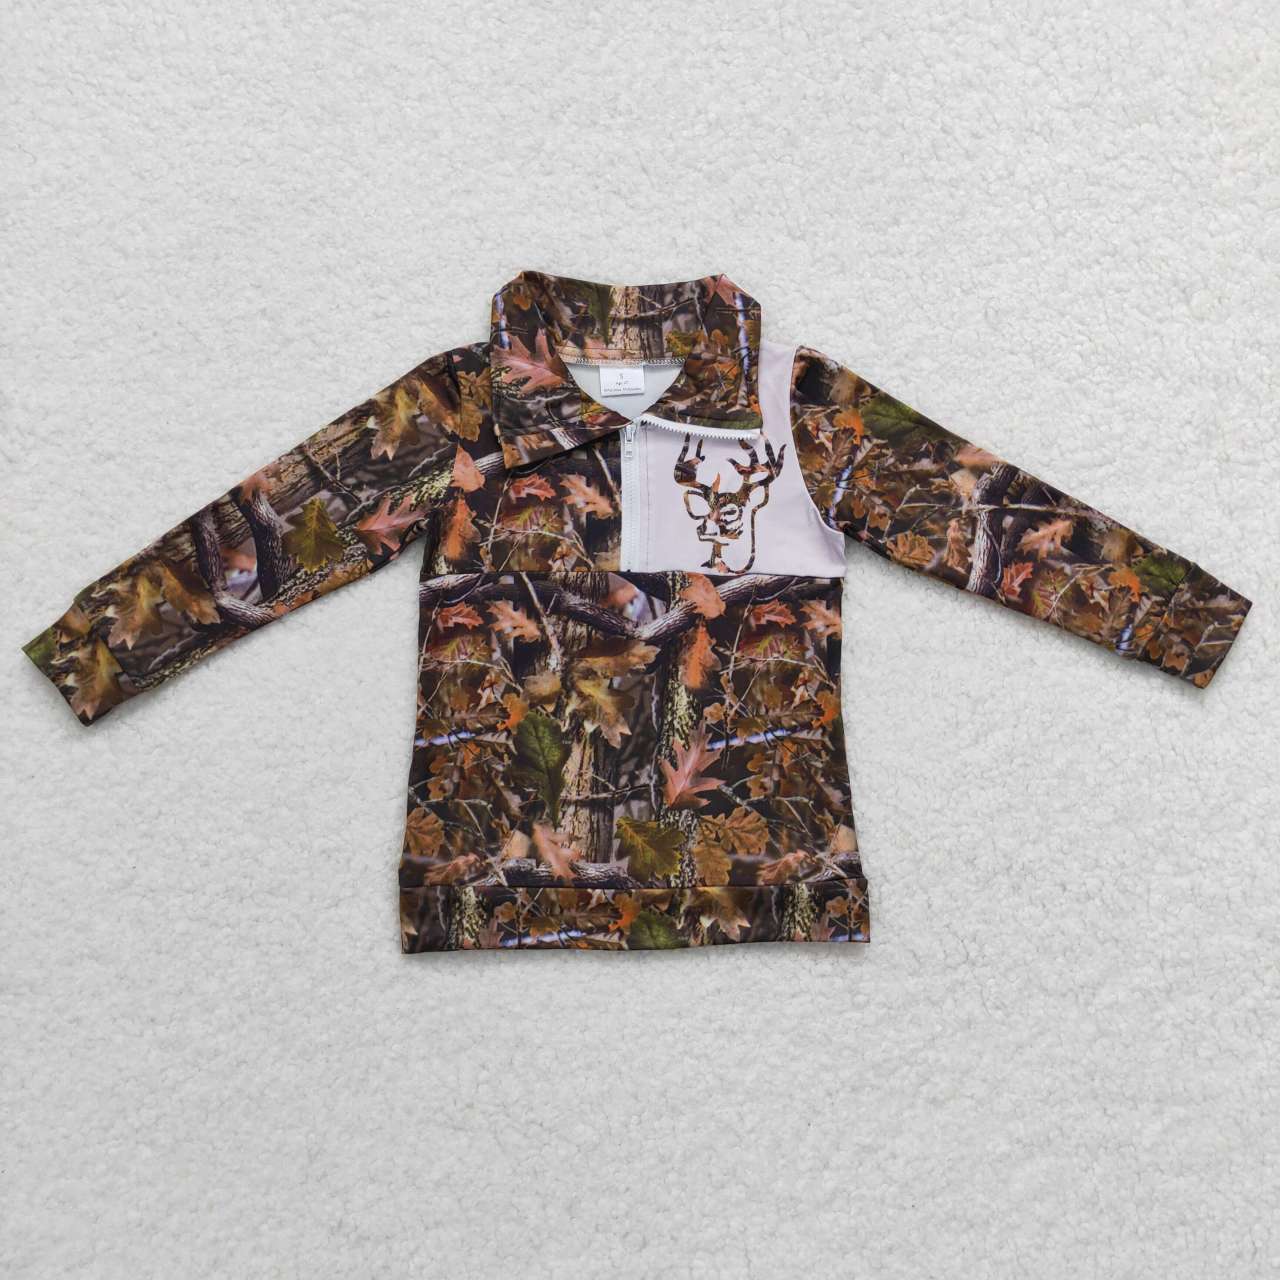 BT0331  Green camo deer print boys go hunting pullover button tee shirt top